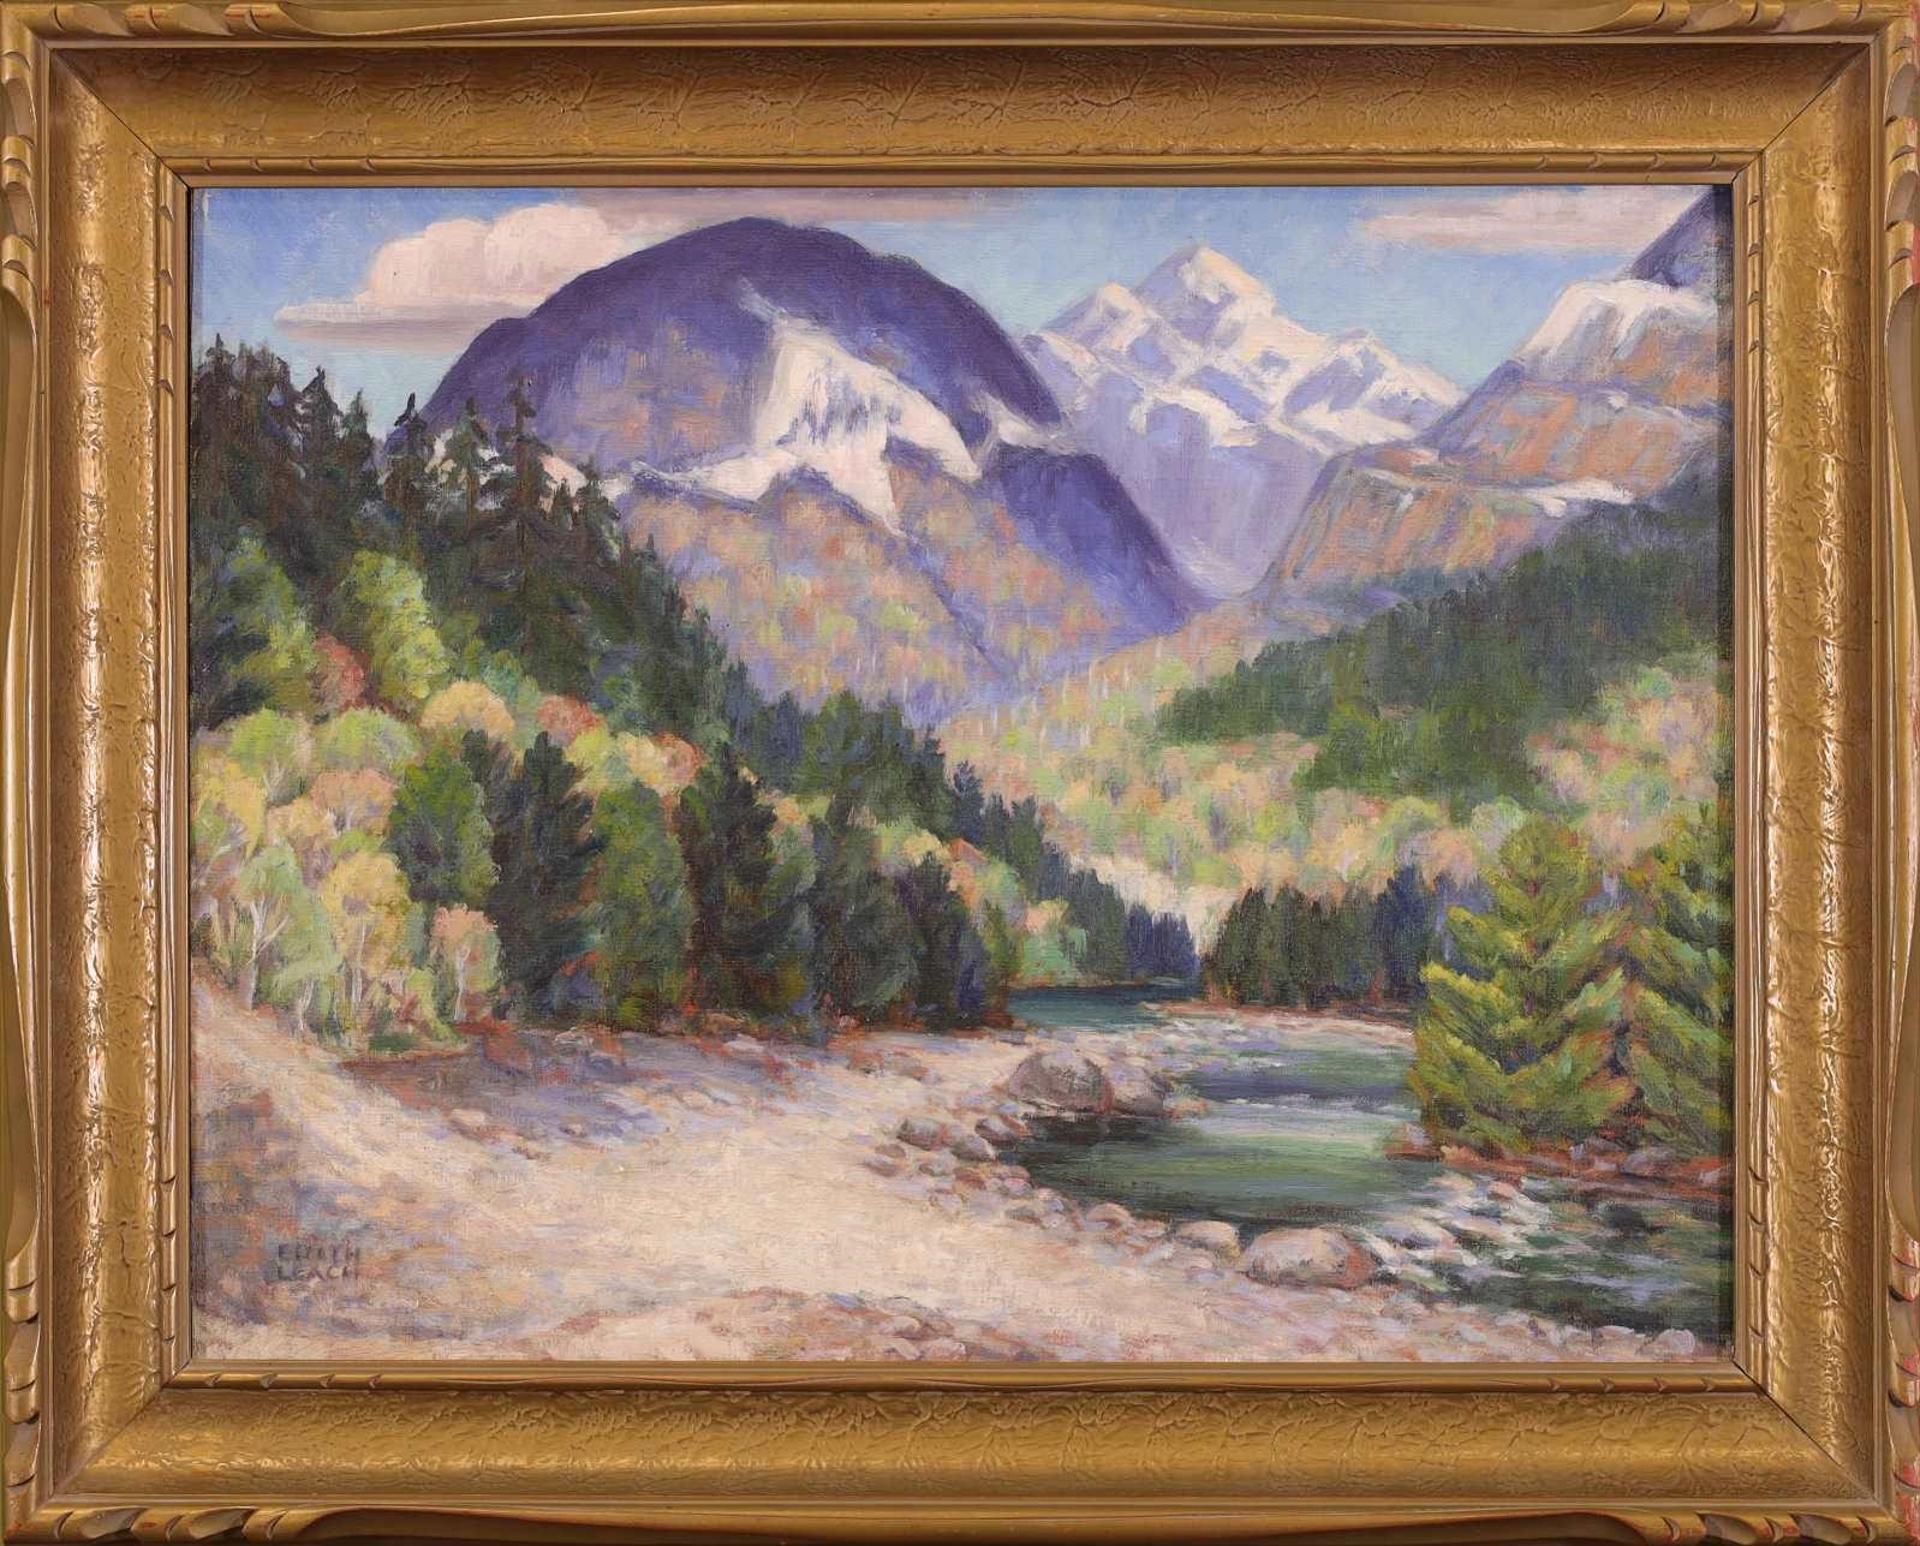 Edith Leach - Untitled, Rocky Mountain River Landscape